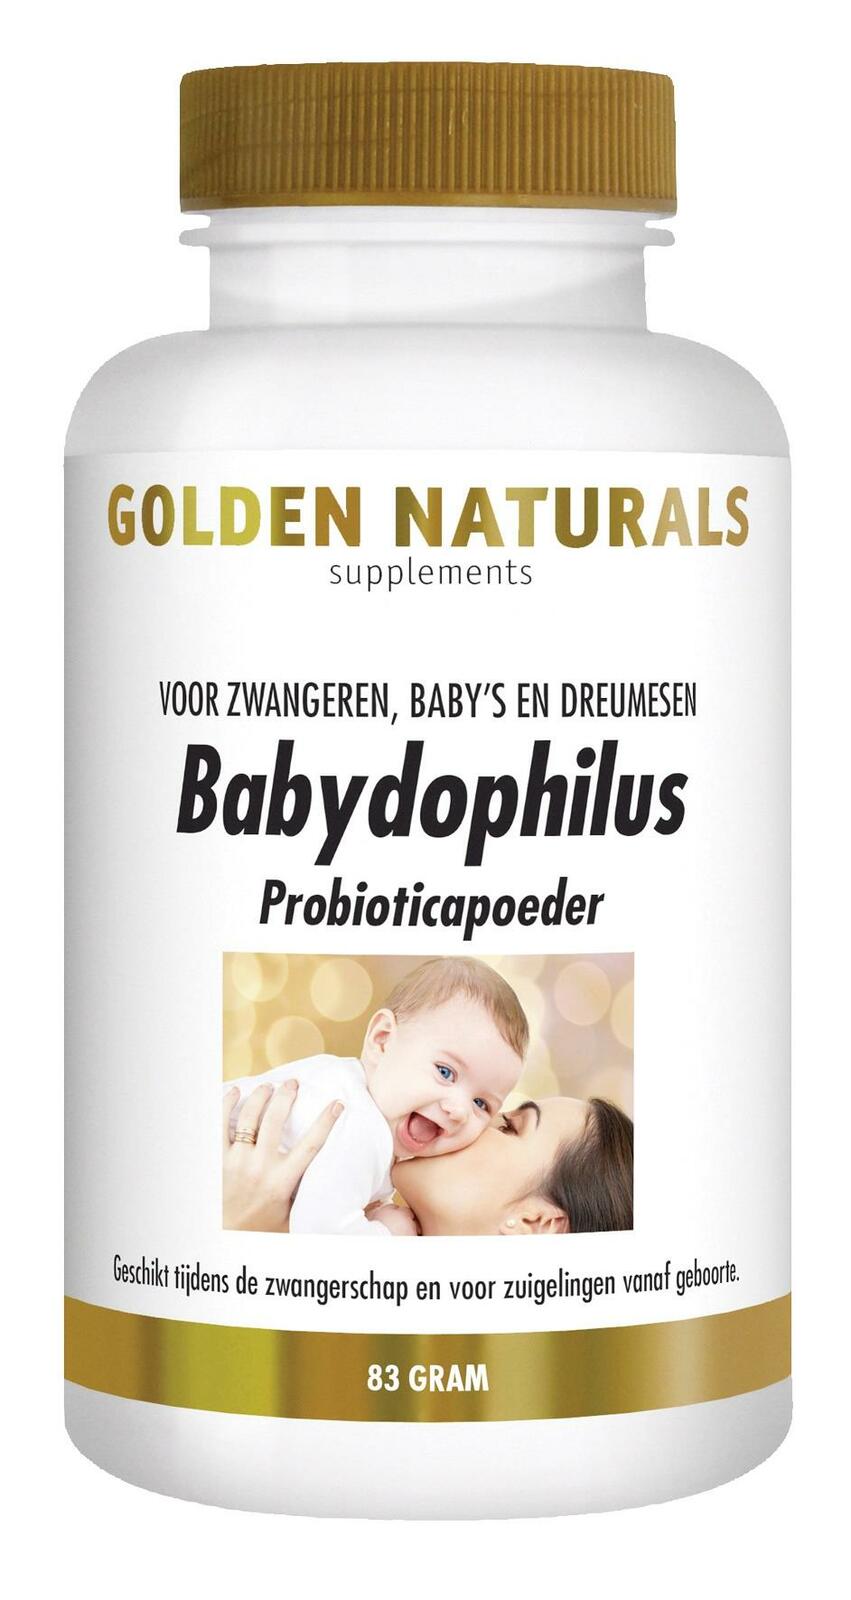 Golden Naturals Babydophilus Probioticapoeder kopen